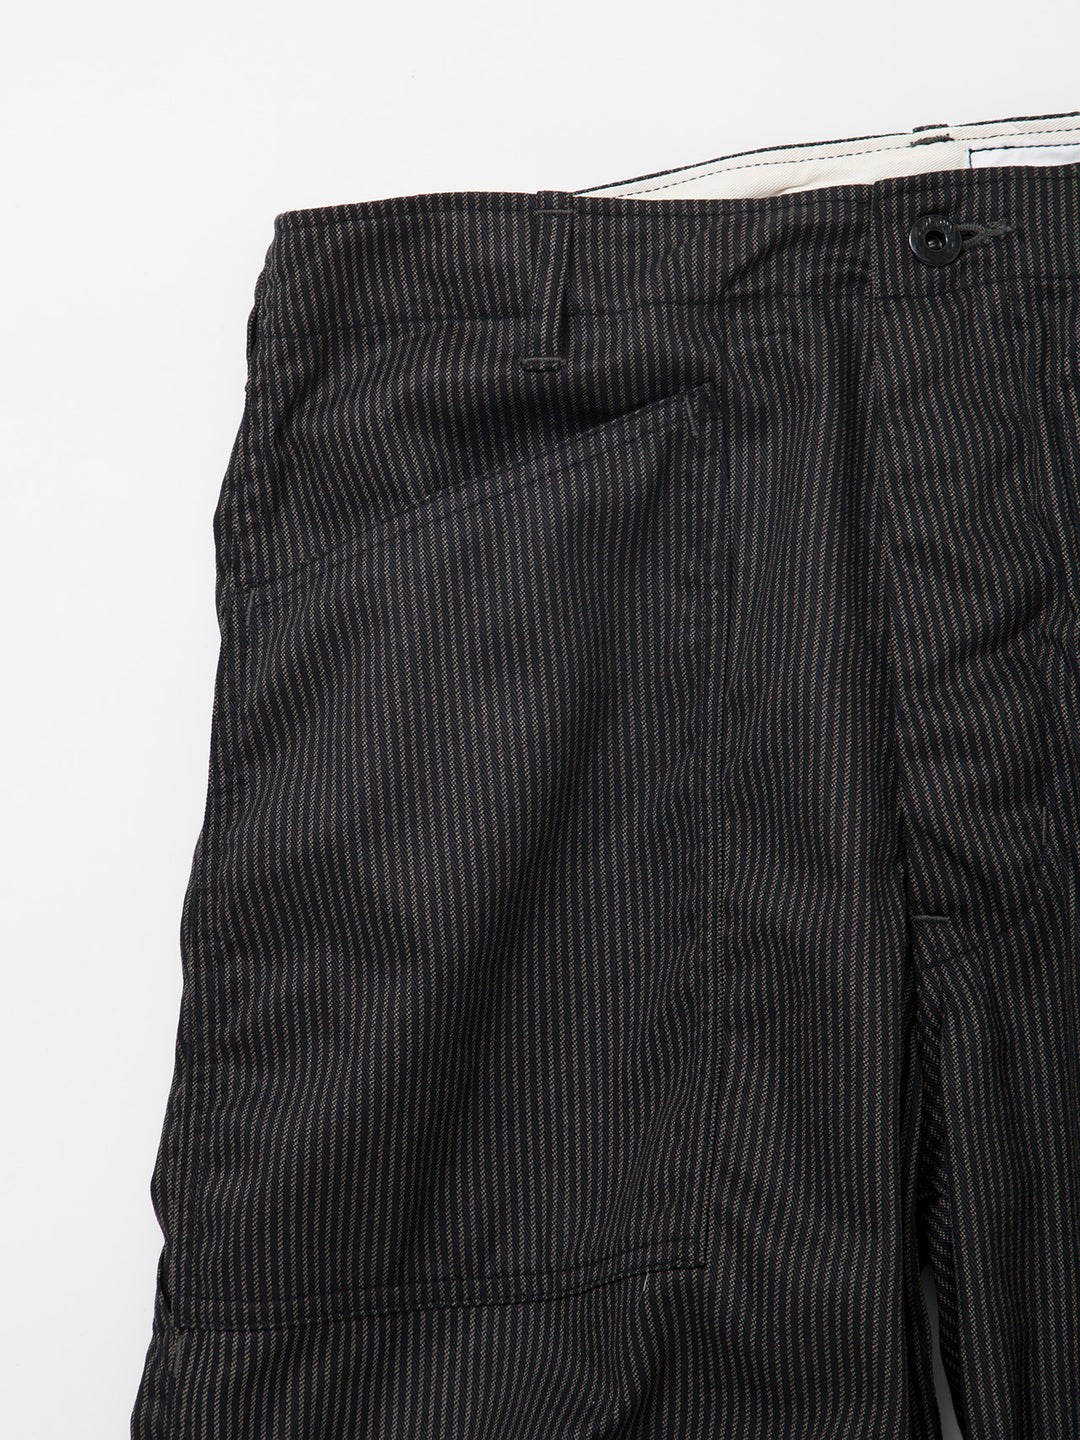 FATIGUE SLACKS - FP017・"UTILITY RM-43 SLACKS" / Black Key Stripe - Grey Stripe on Black